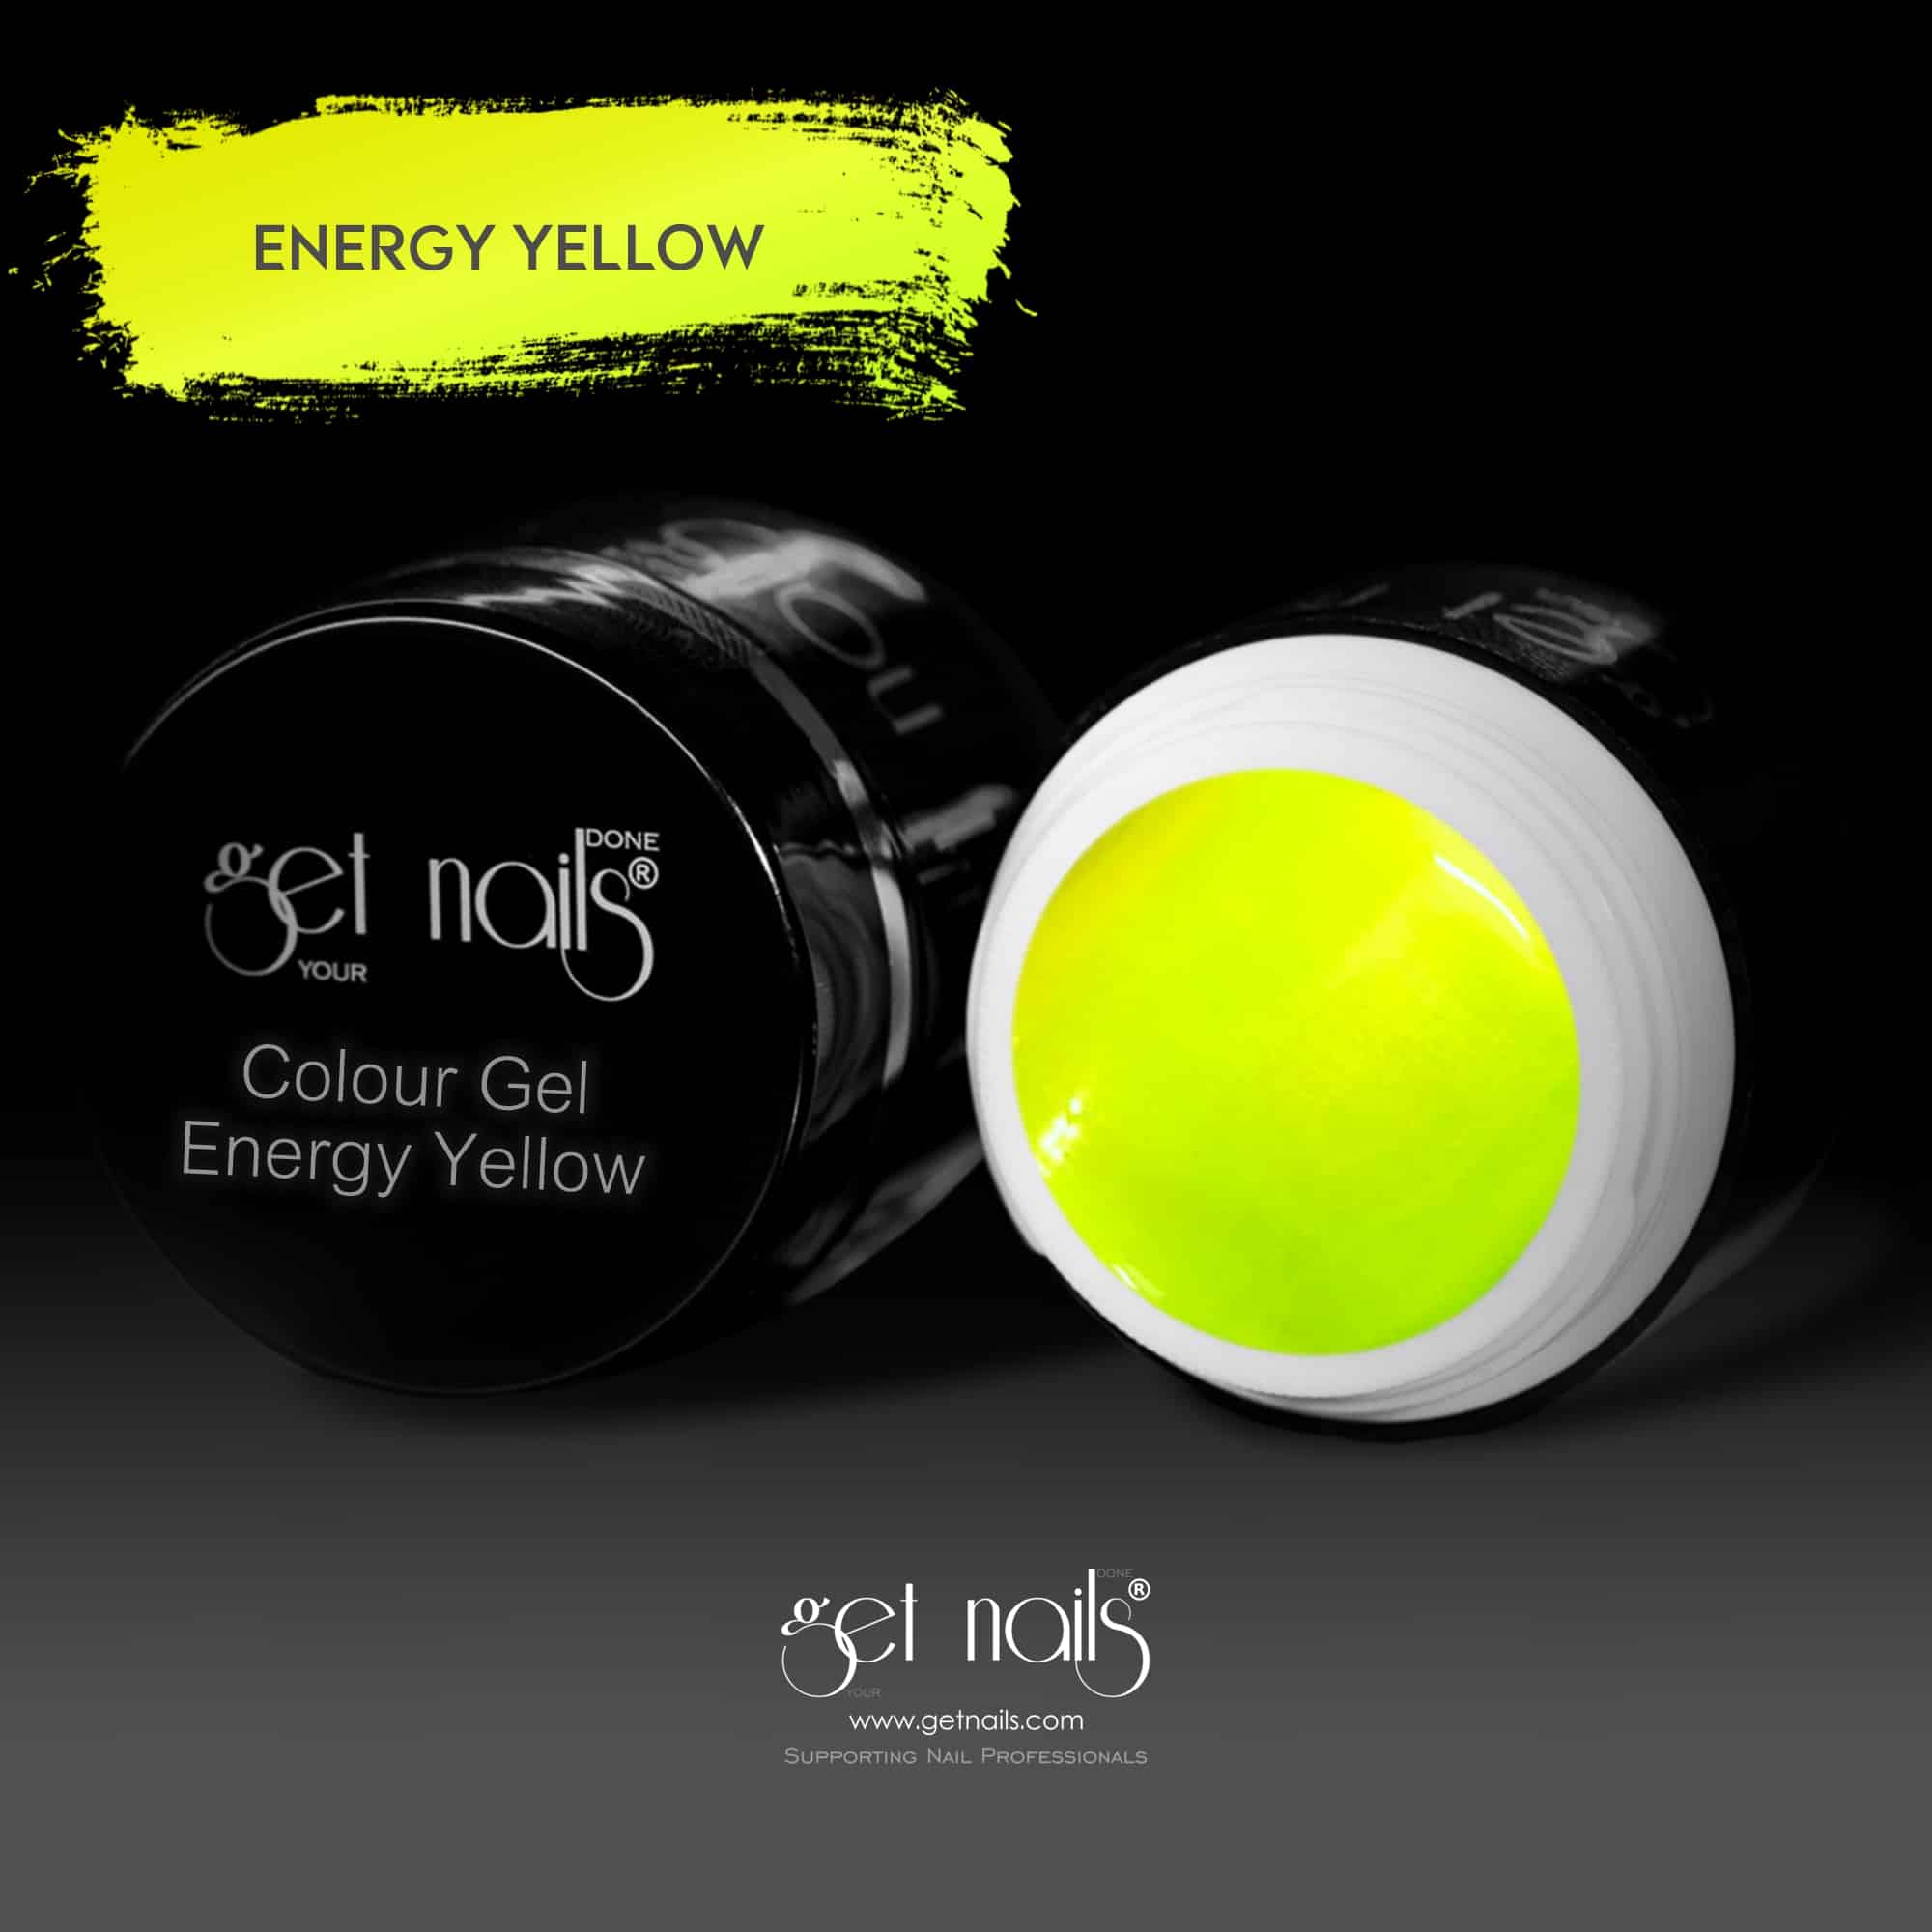 Get Nails Austria - Colour Gel Energy Yellow 5g